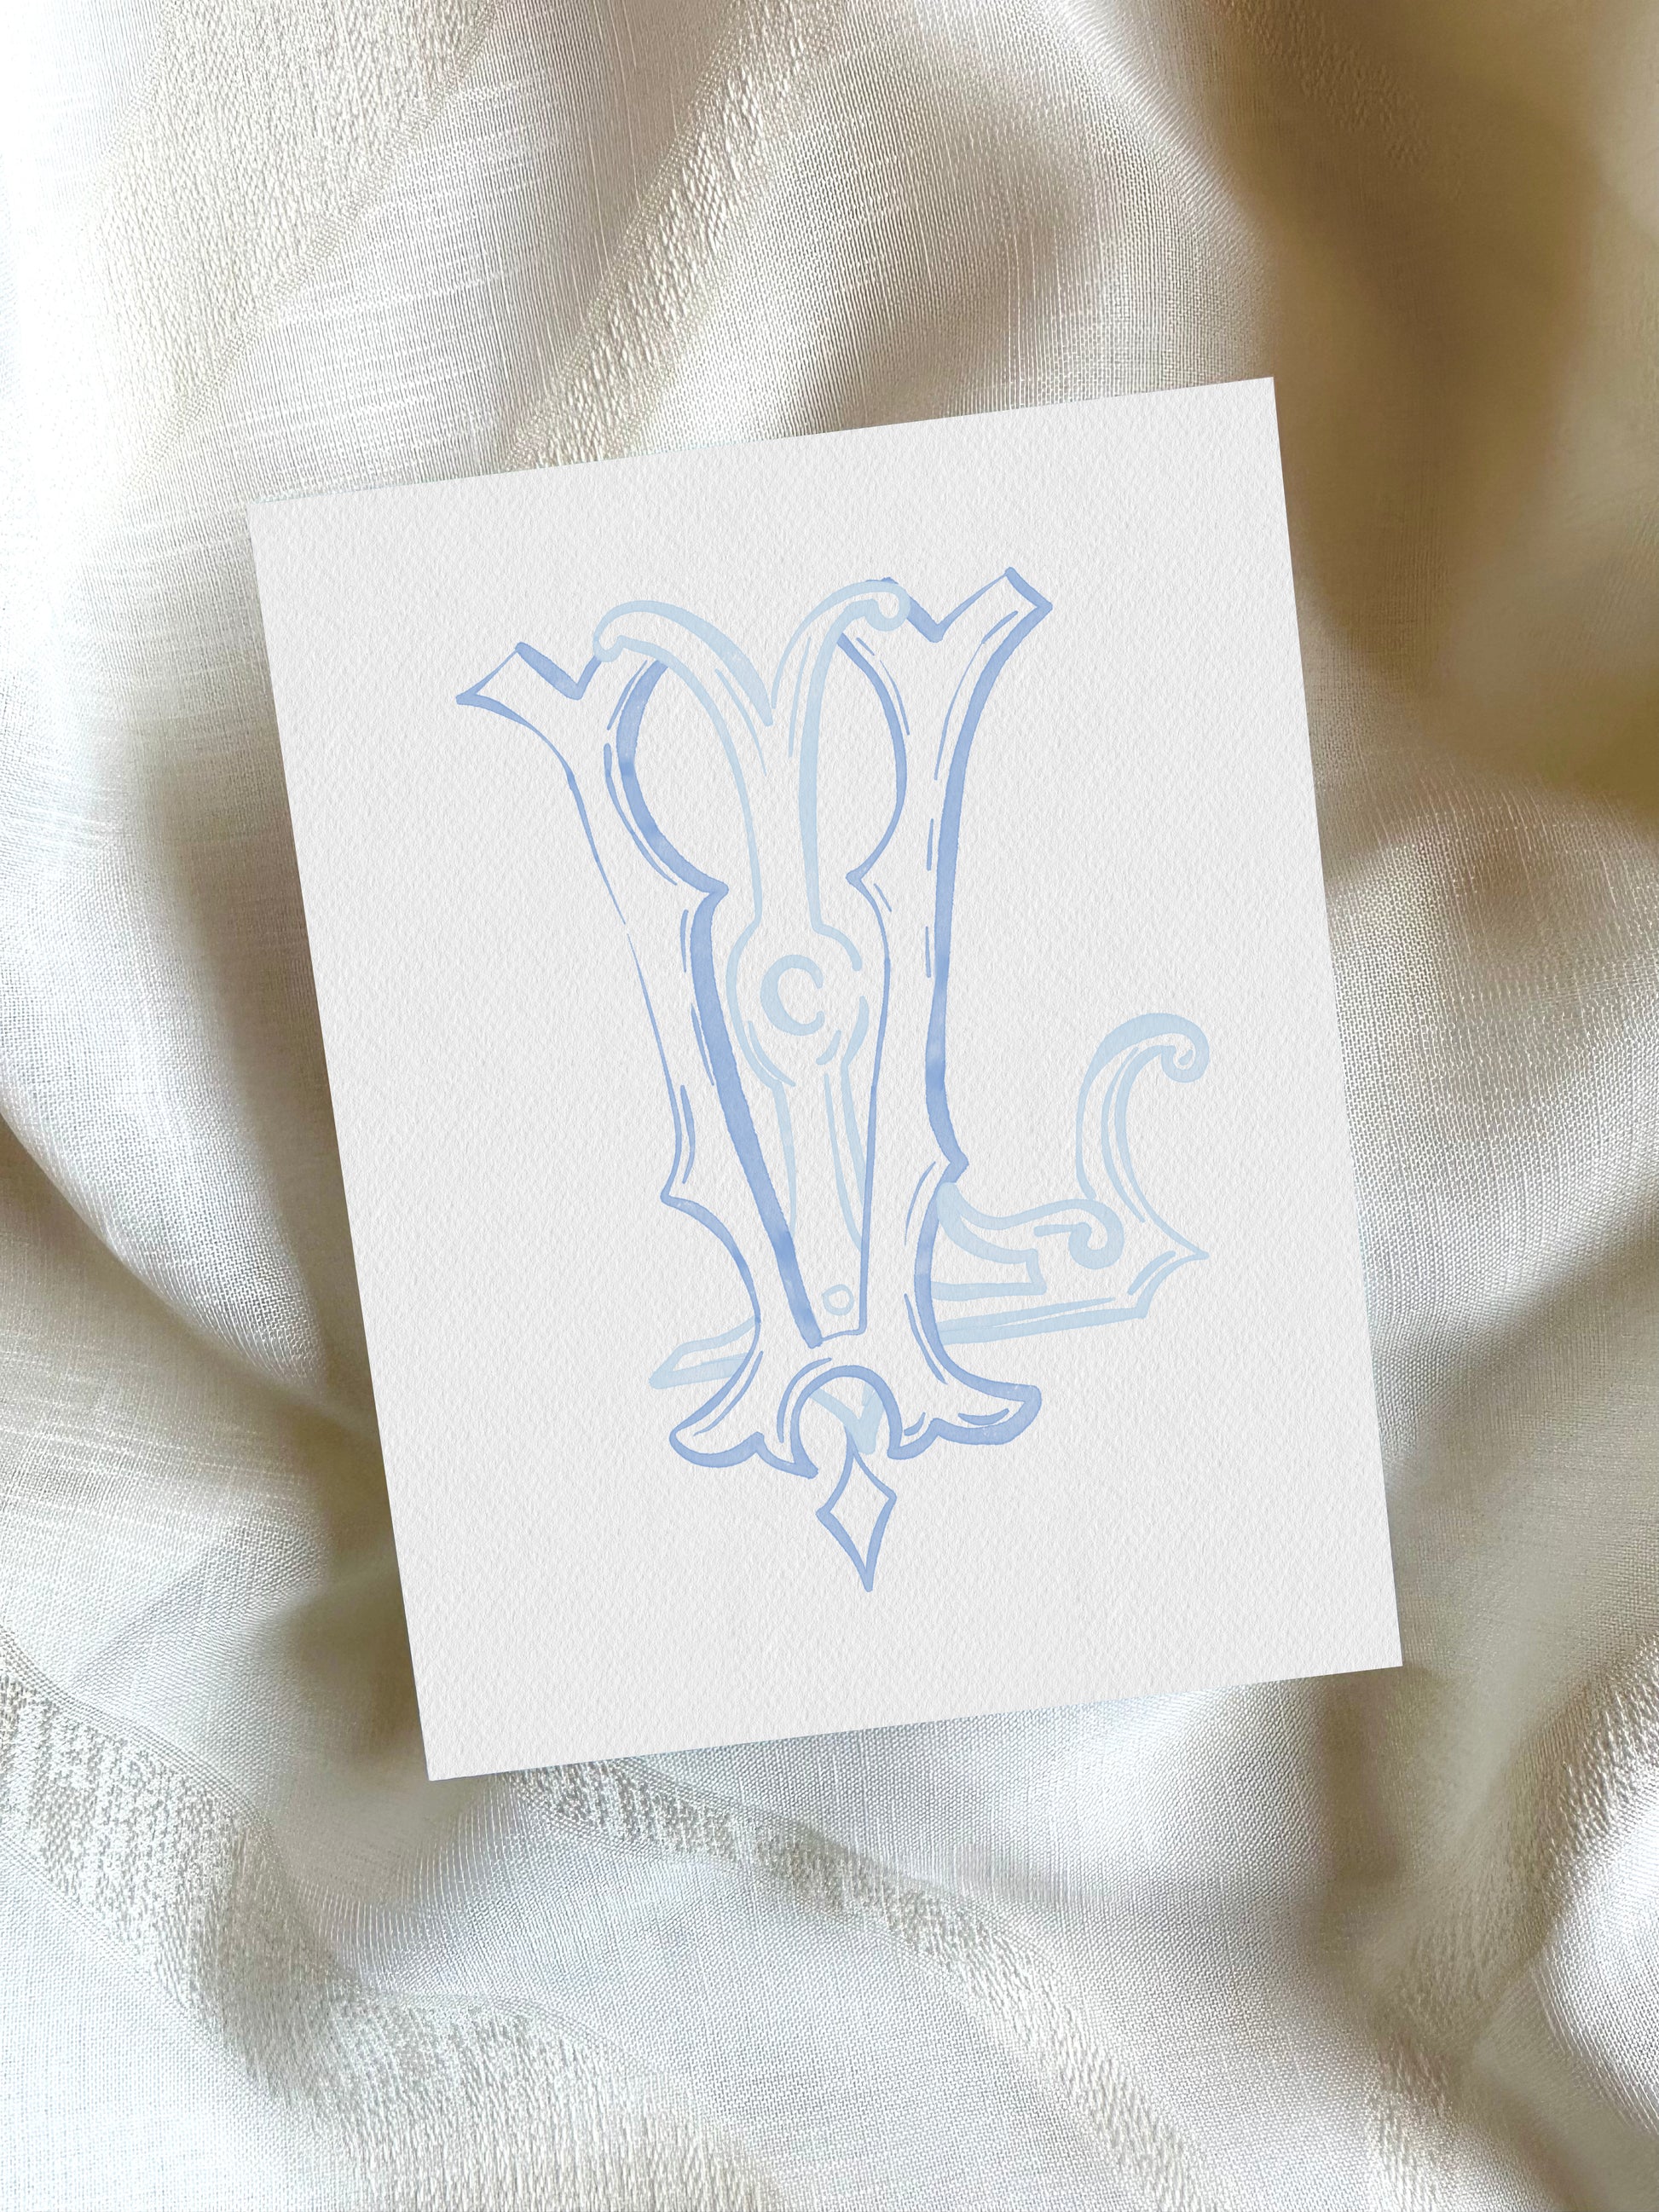 2 Letter Monogram with Letters LV VL | Digital Download - Wedding Monogram SVG, Personal Logo, Wedding Logo for Wedding Invitations The Wedding Crest Lab